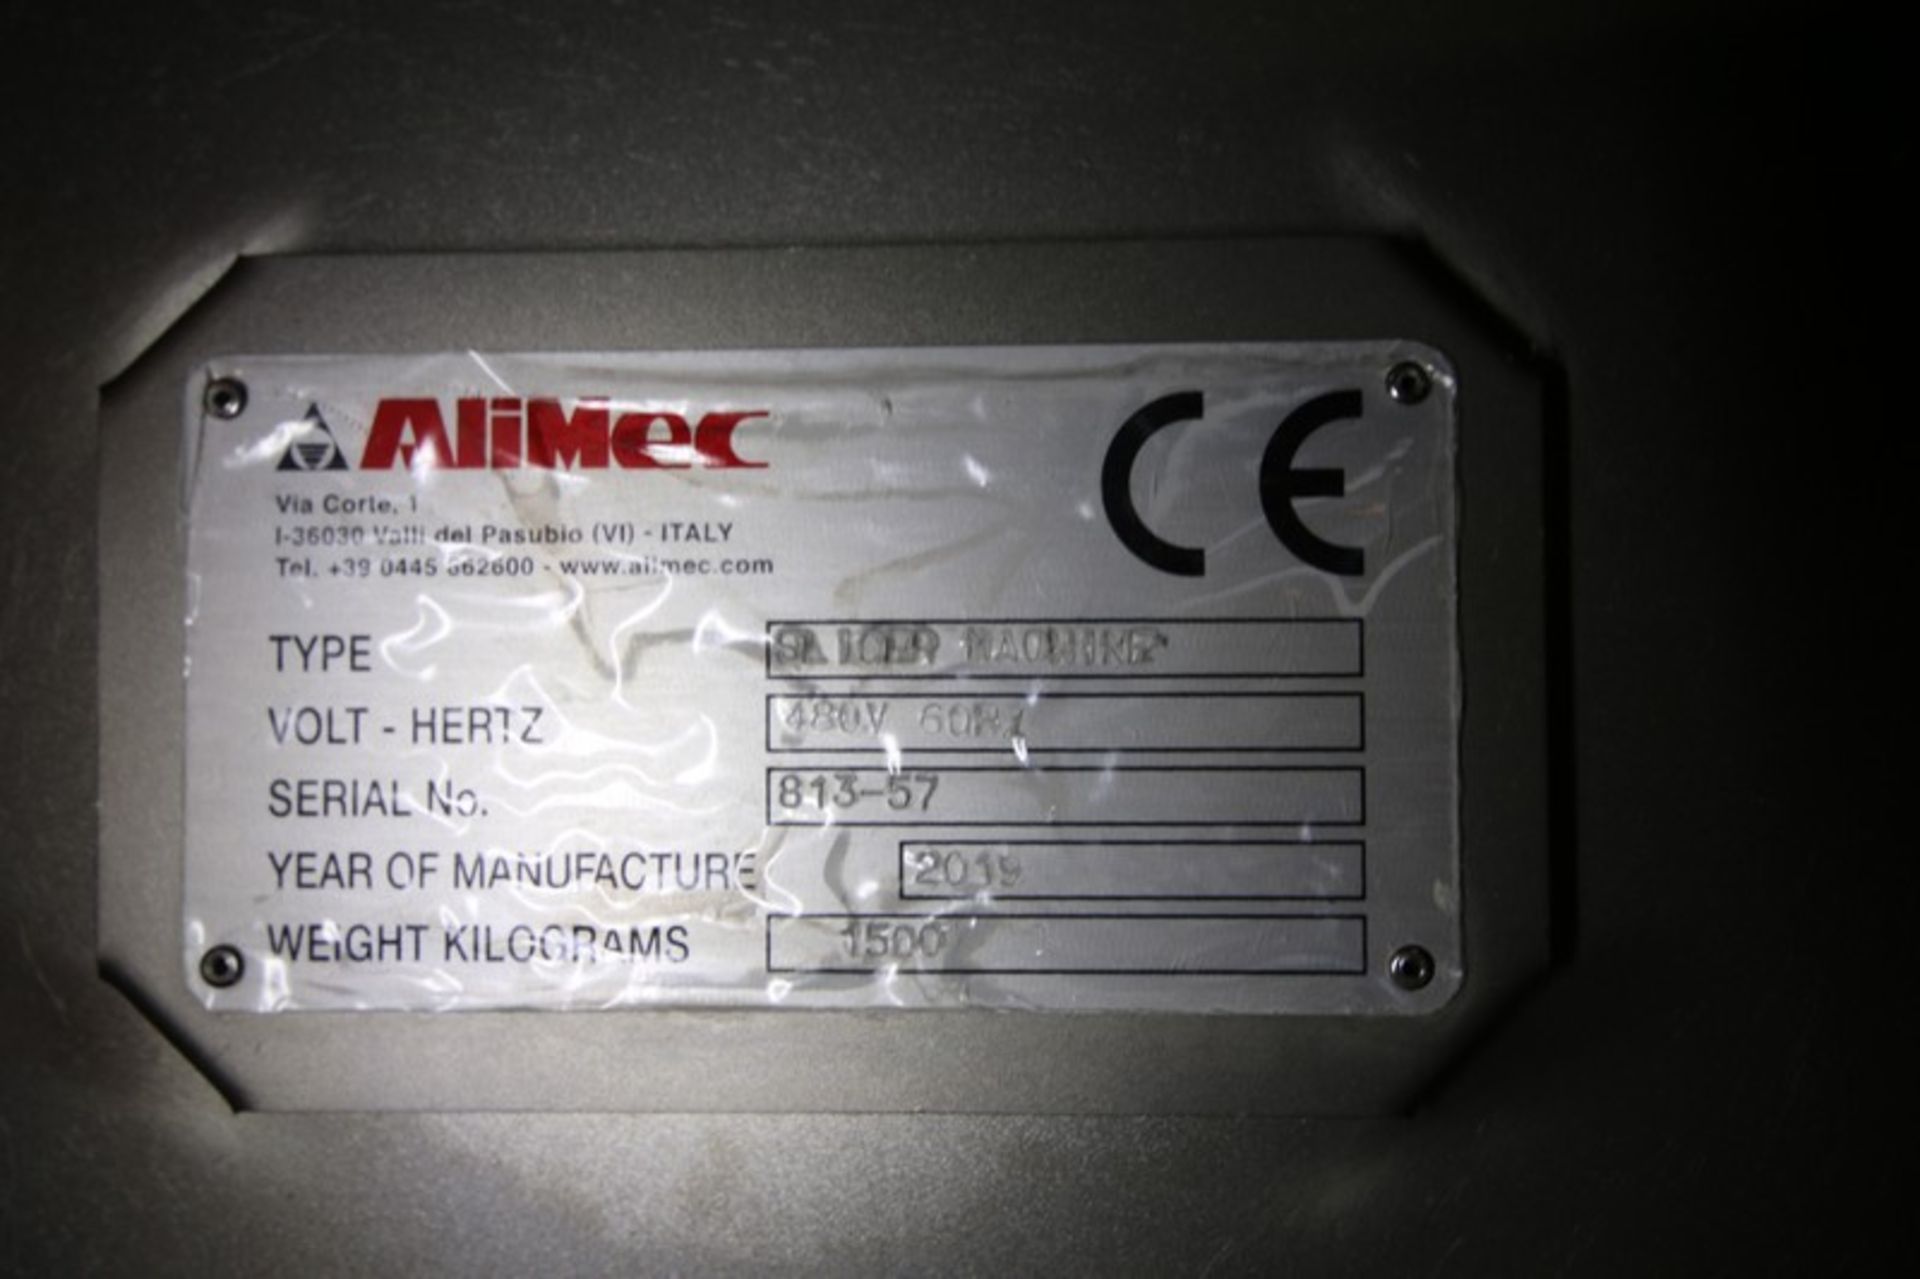 2019 Alimec S/S Pepperoni Slicer, Type SLICER MACHINE, SN 813-57, with Allen Bradley Stratix 5700 - Image 10 of 11